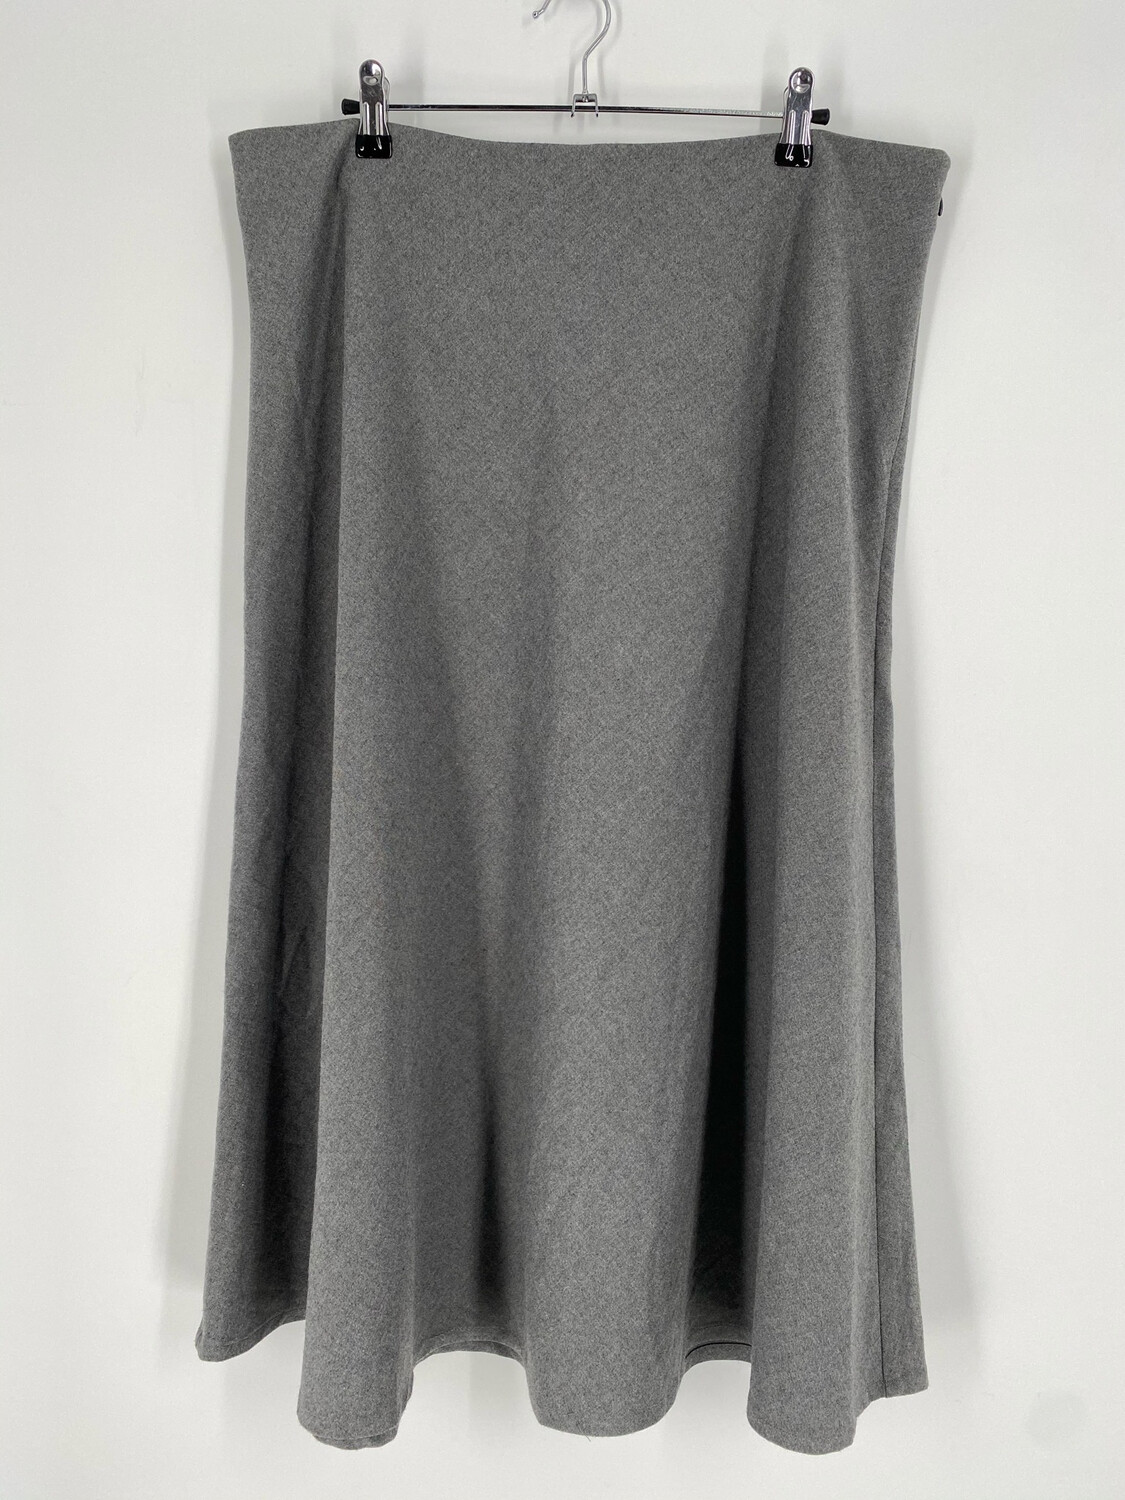 Orvis Vintage Grey Skirt Size 14